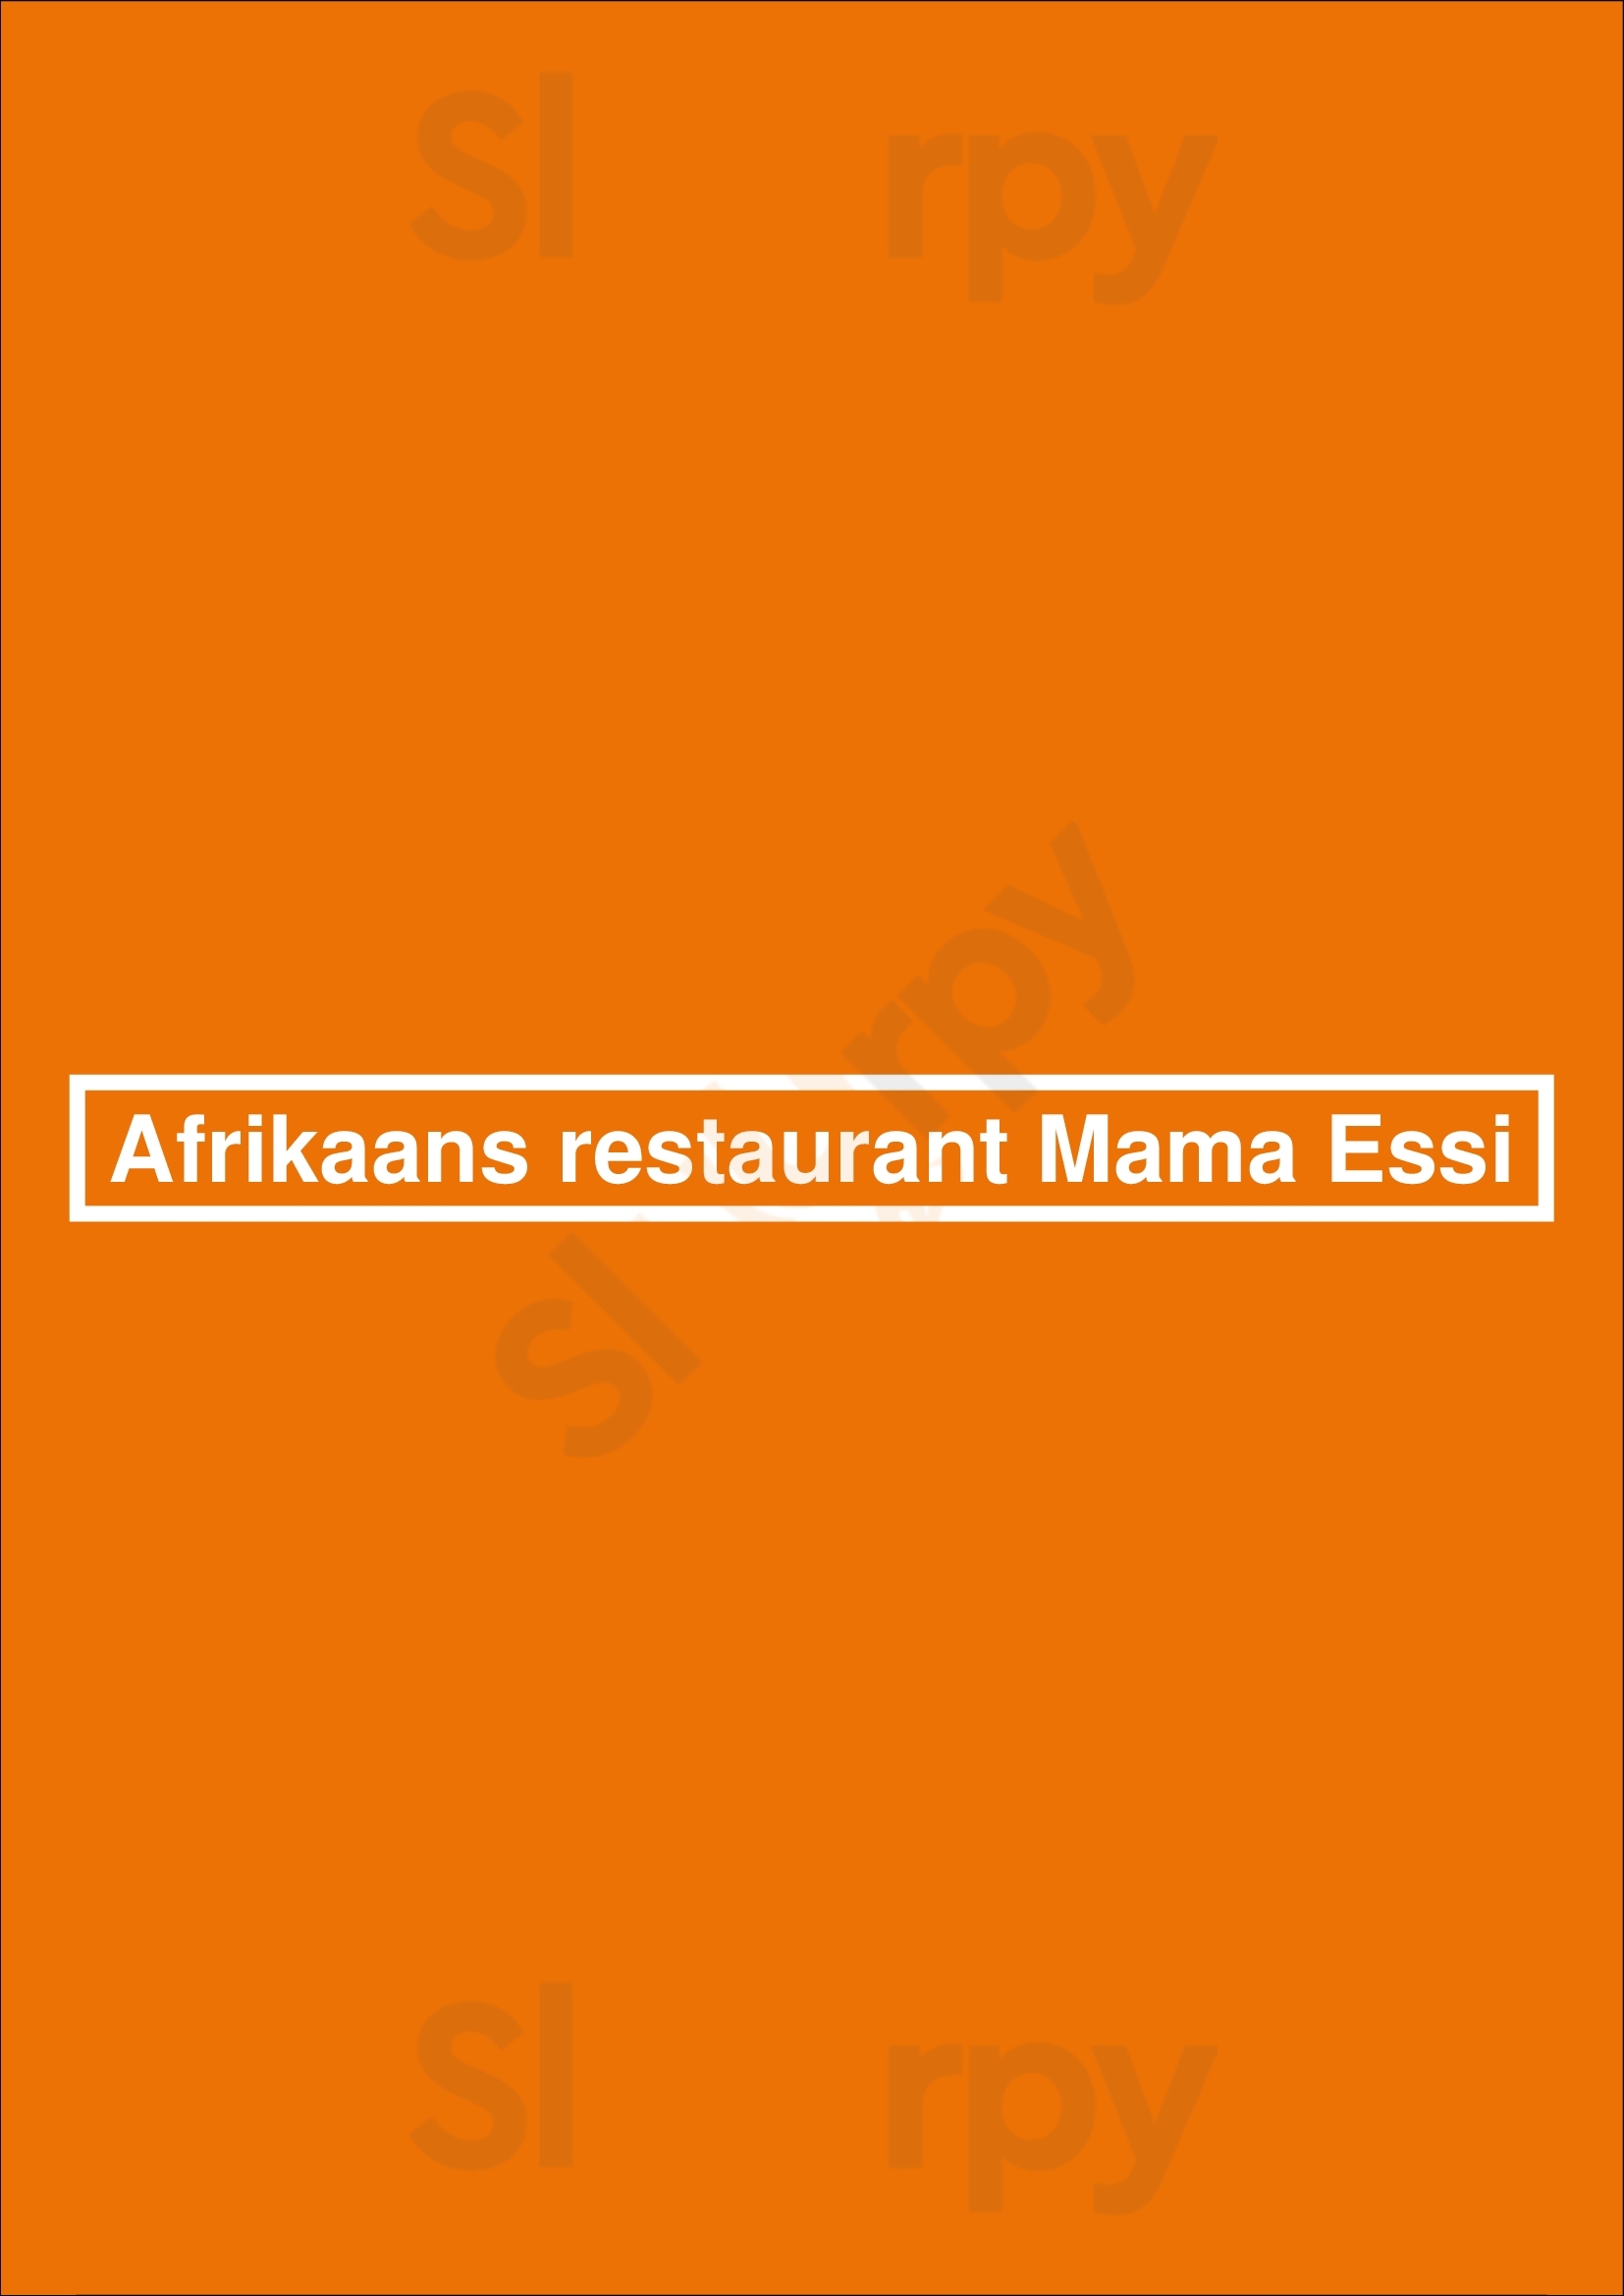 Afrikaans Restaurant Mama Essi Rotterdam Menu - 1